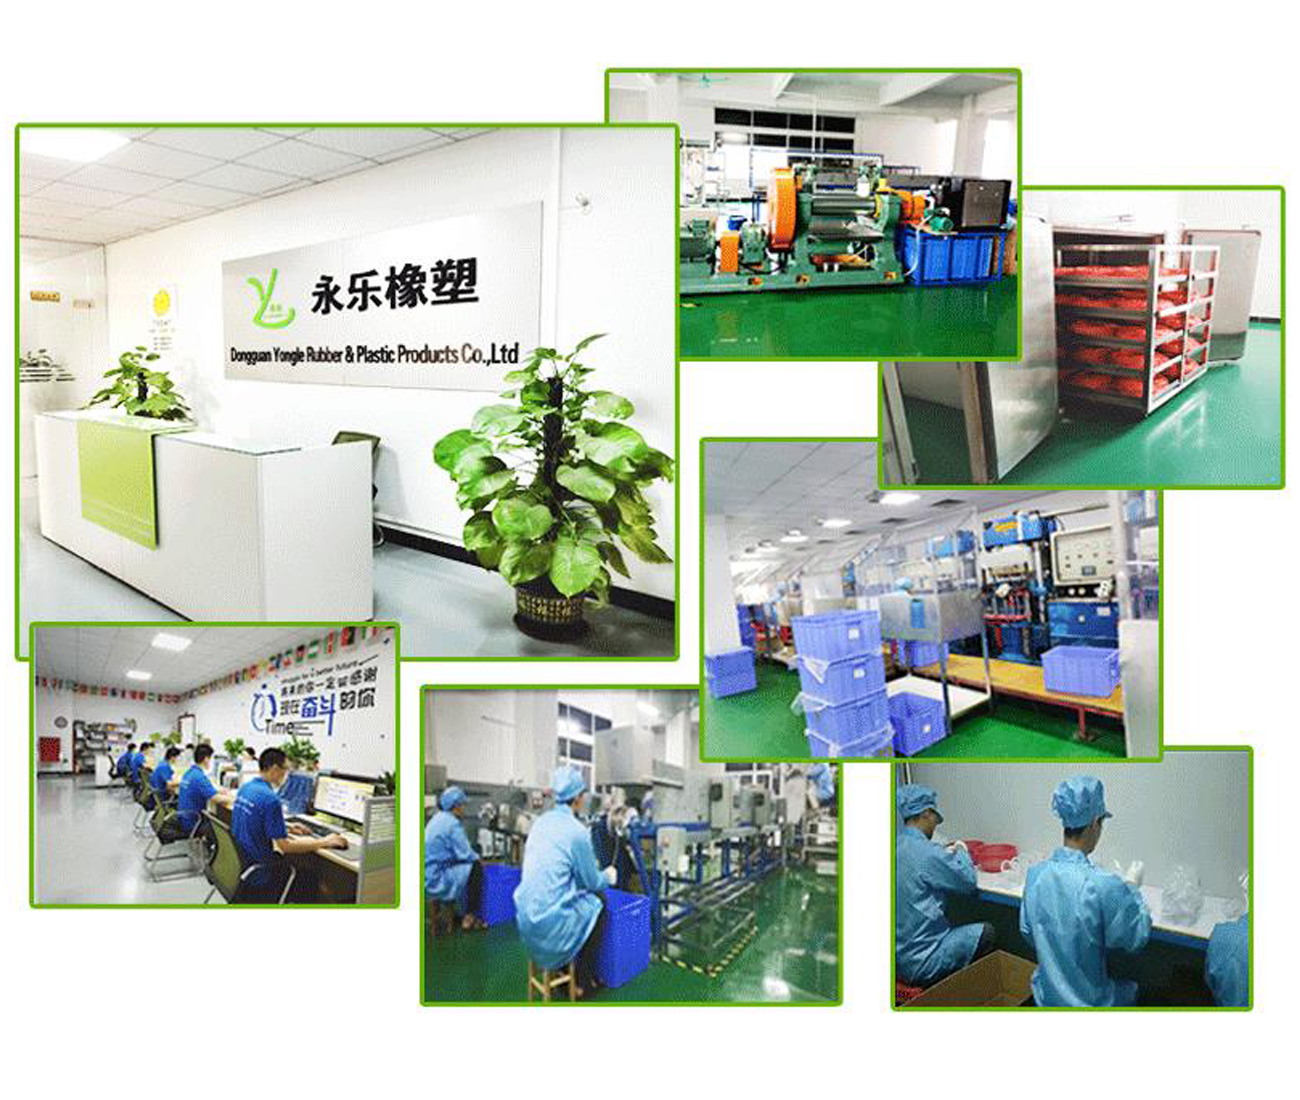 Dongguan Yongle Rubber Products Co., Ltd